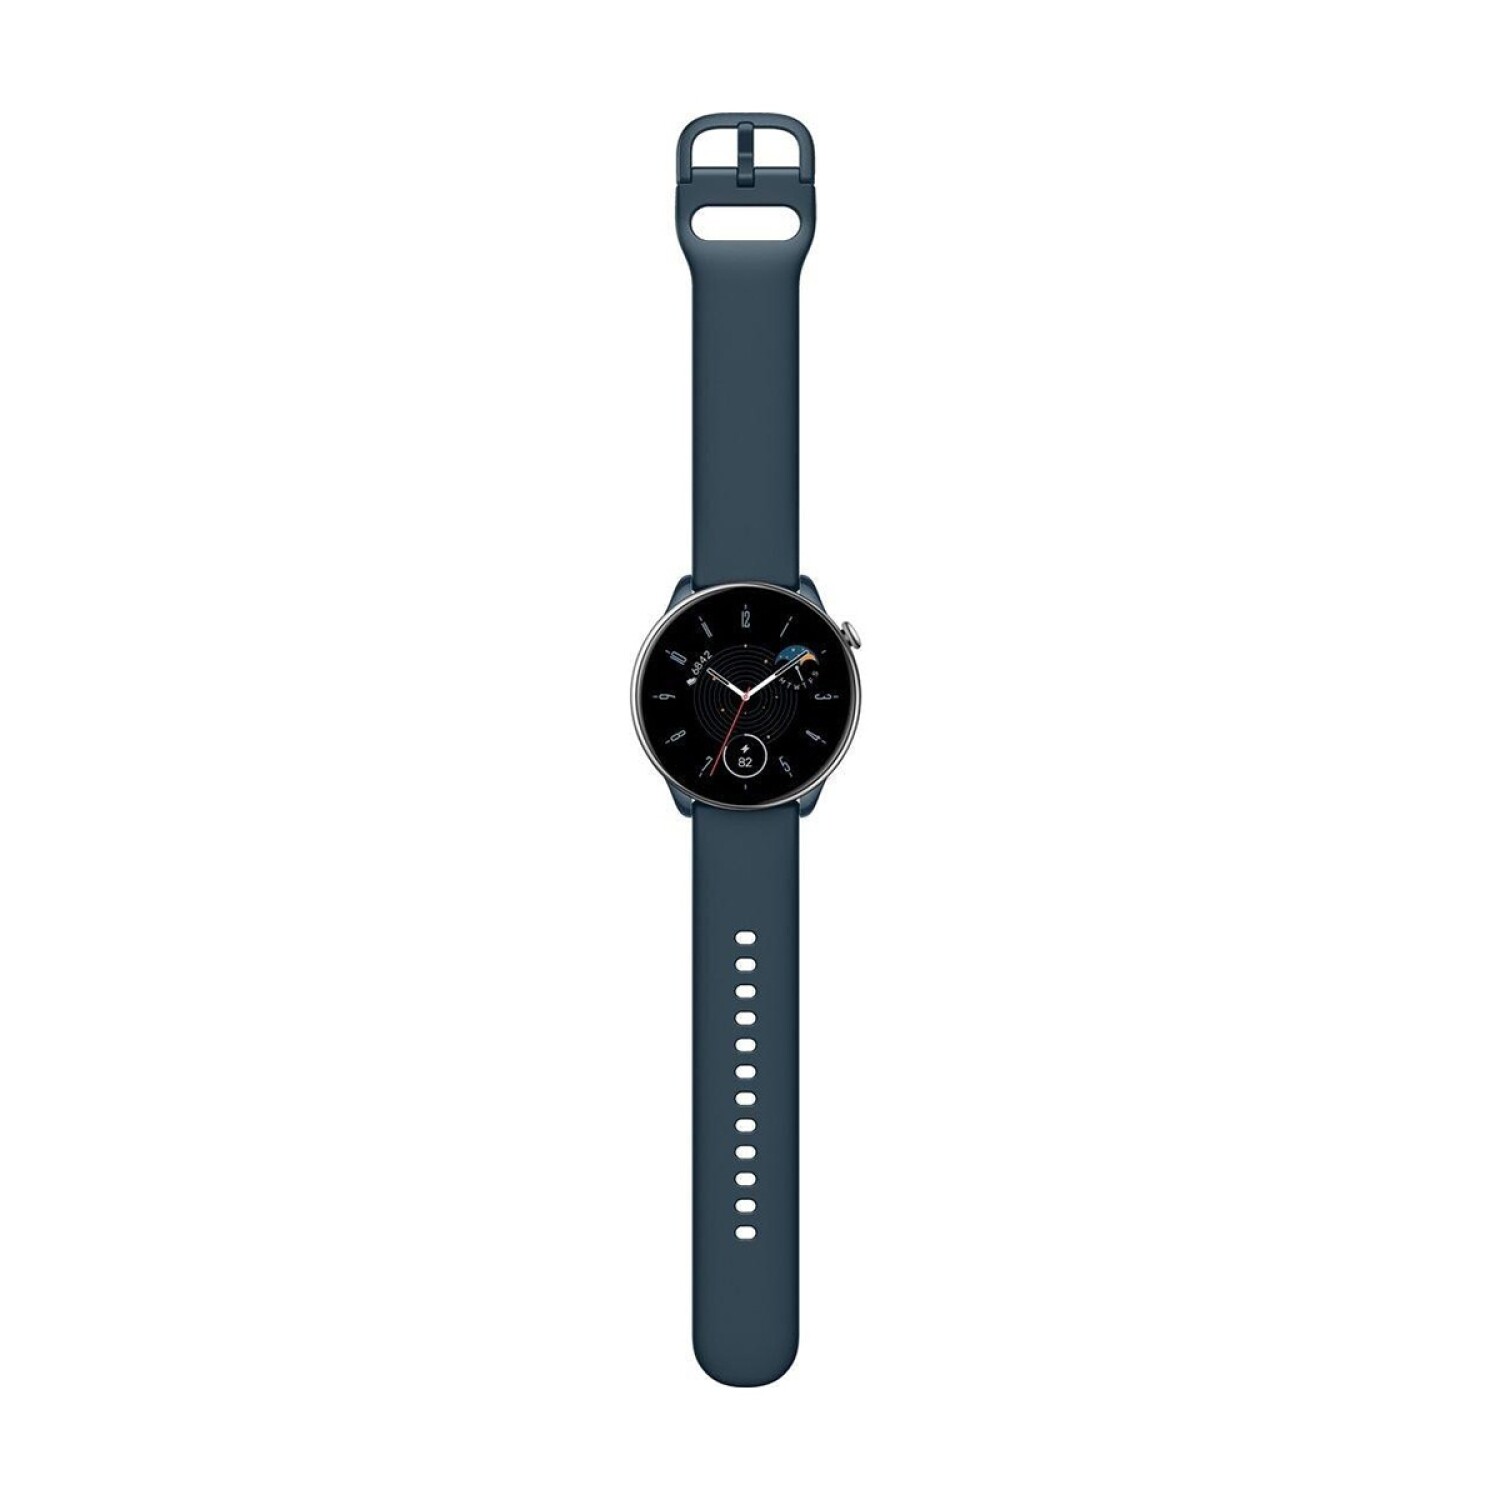 Smartwatch Amazfit GTR Mini - 1.28 + 120 Modos Deportivos